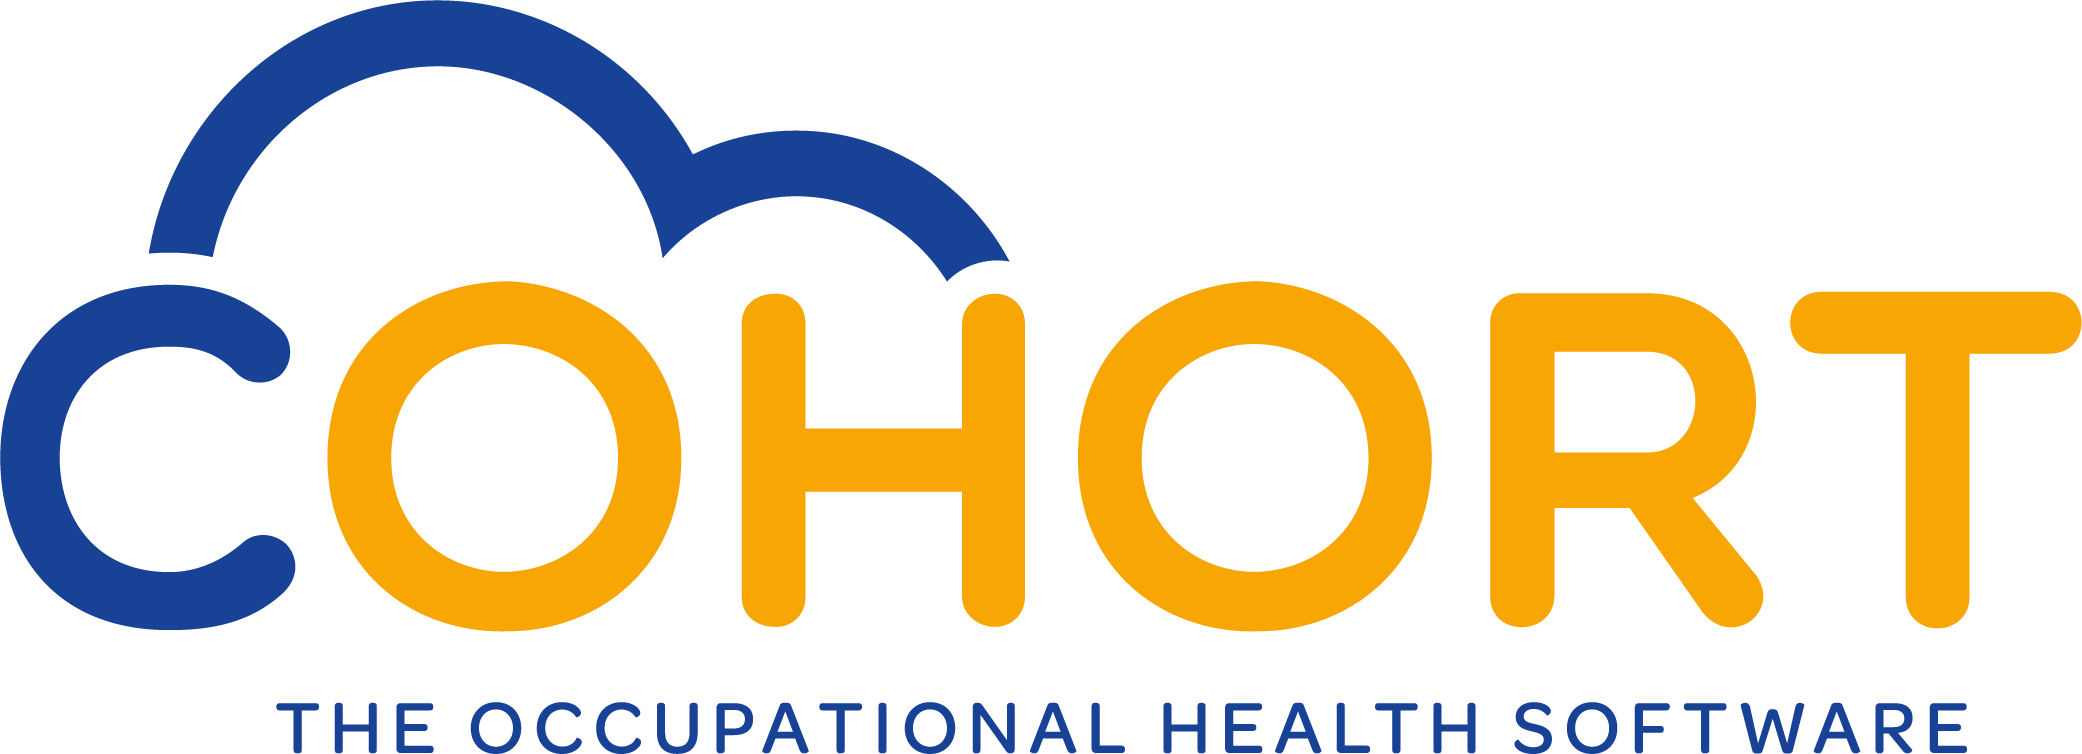 Cohort Software, Occupational Health Software